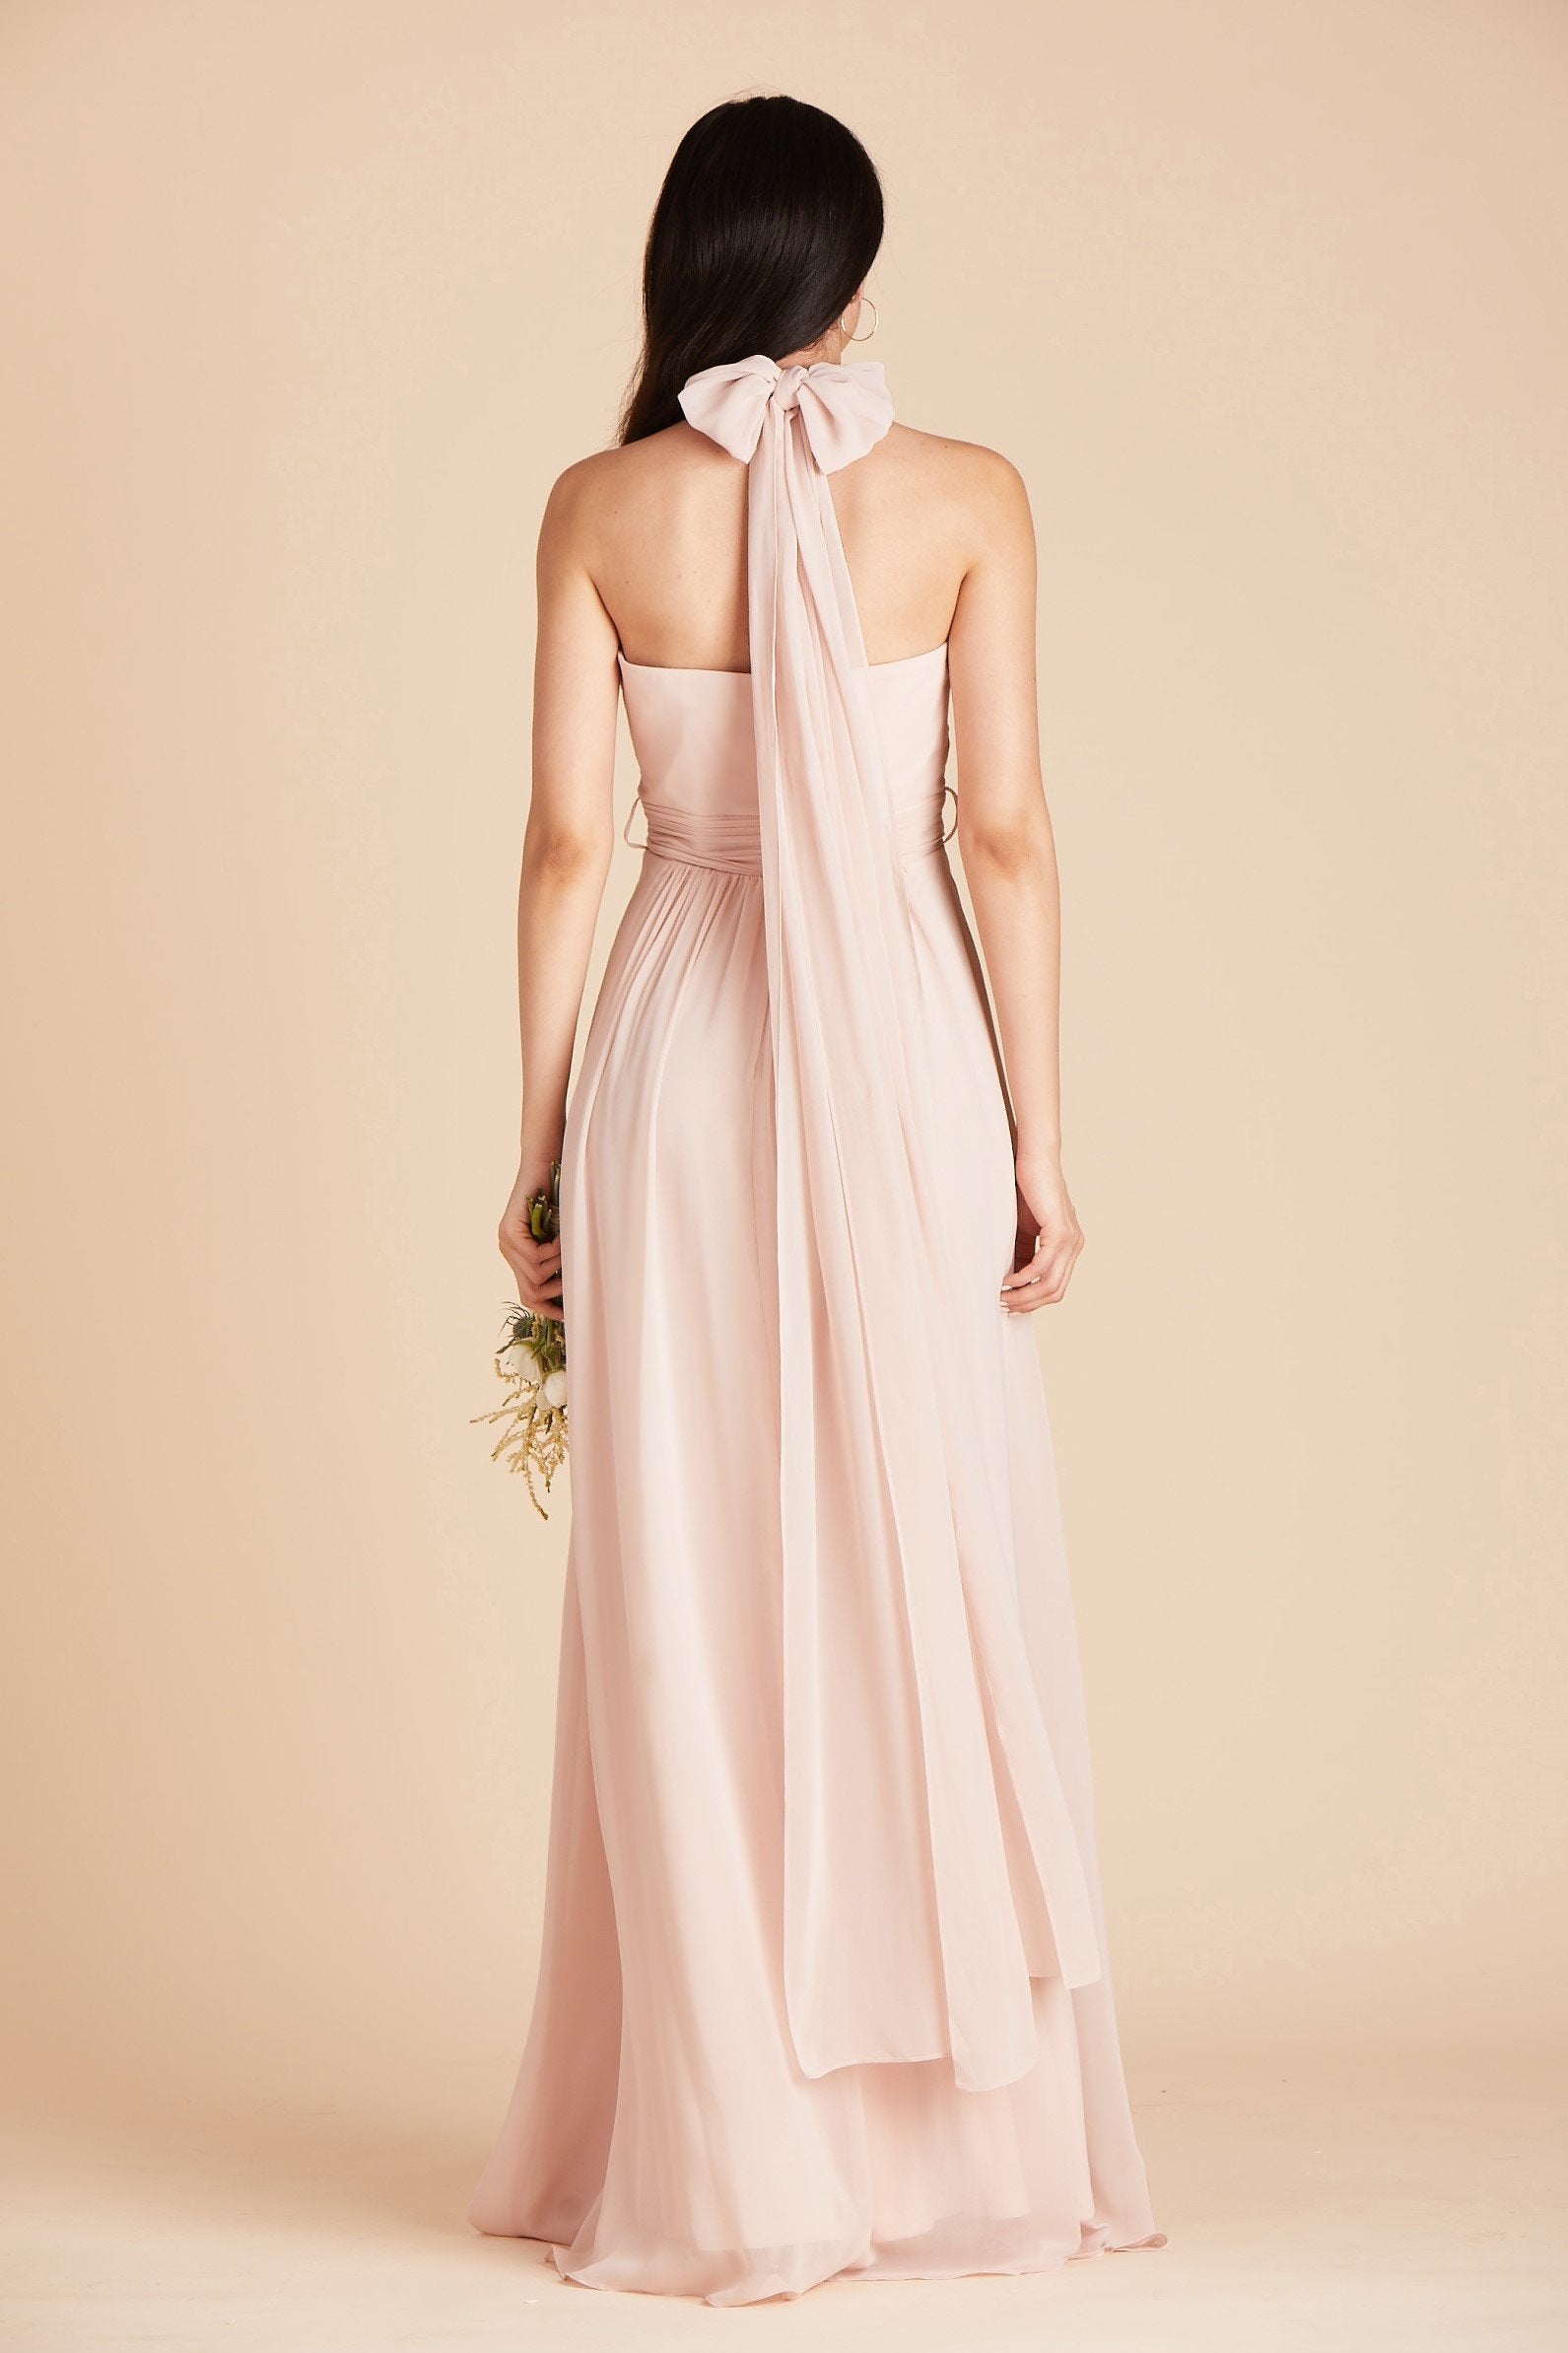 Grace convertible bridesmaid dress in pale blush pink chiffon by Birdy Grey, back view